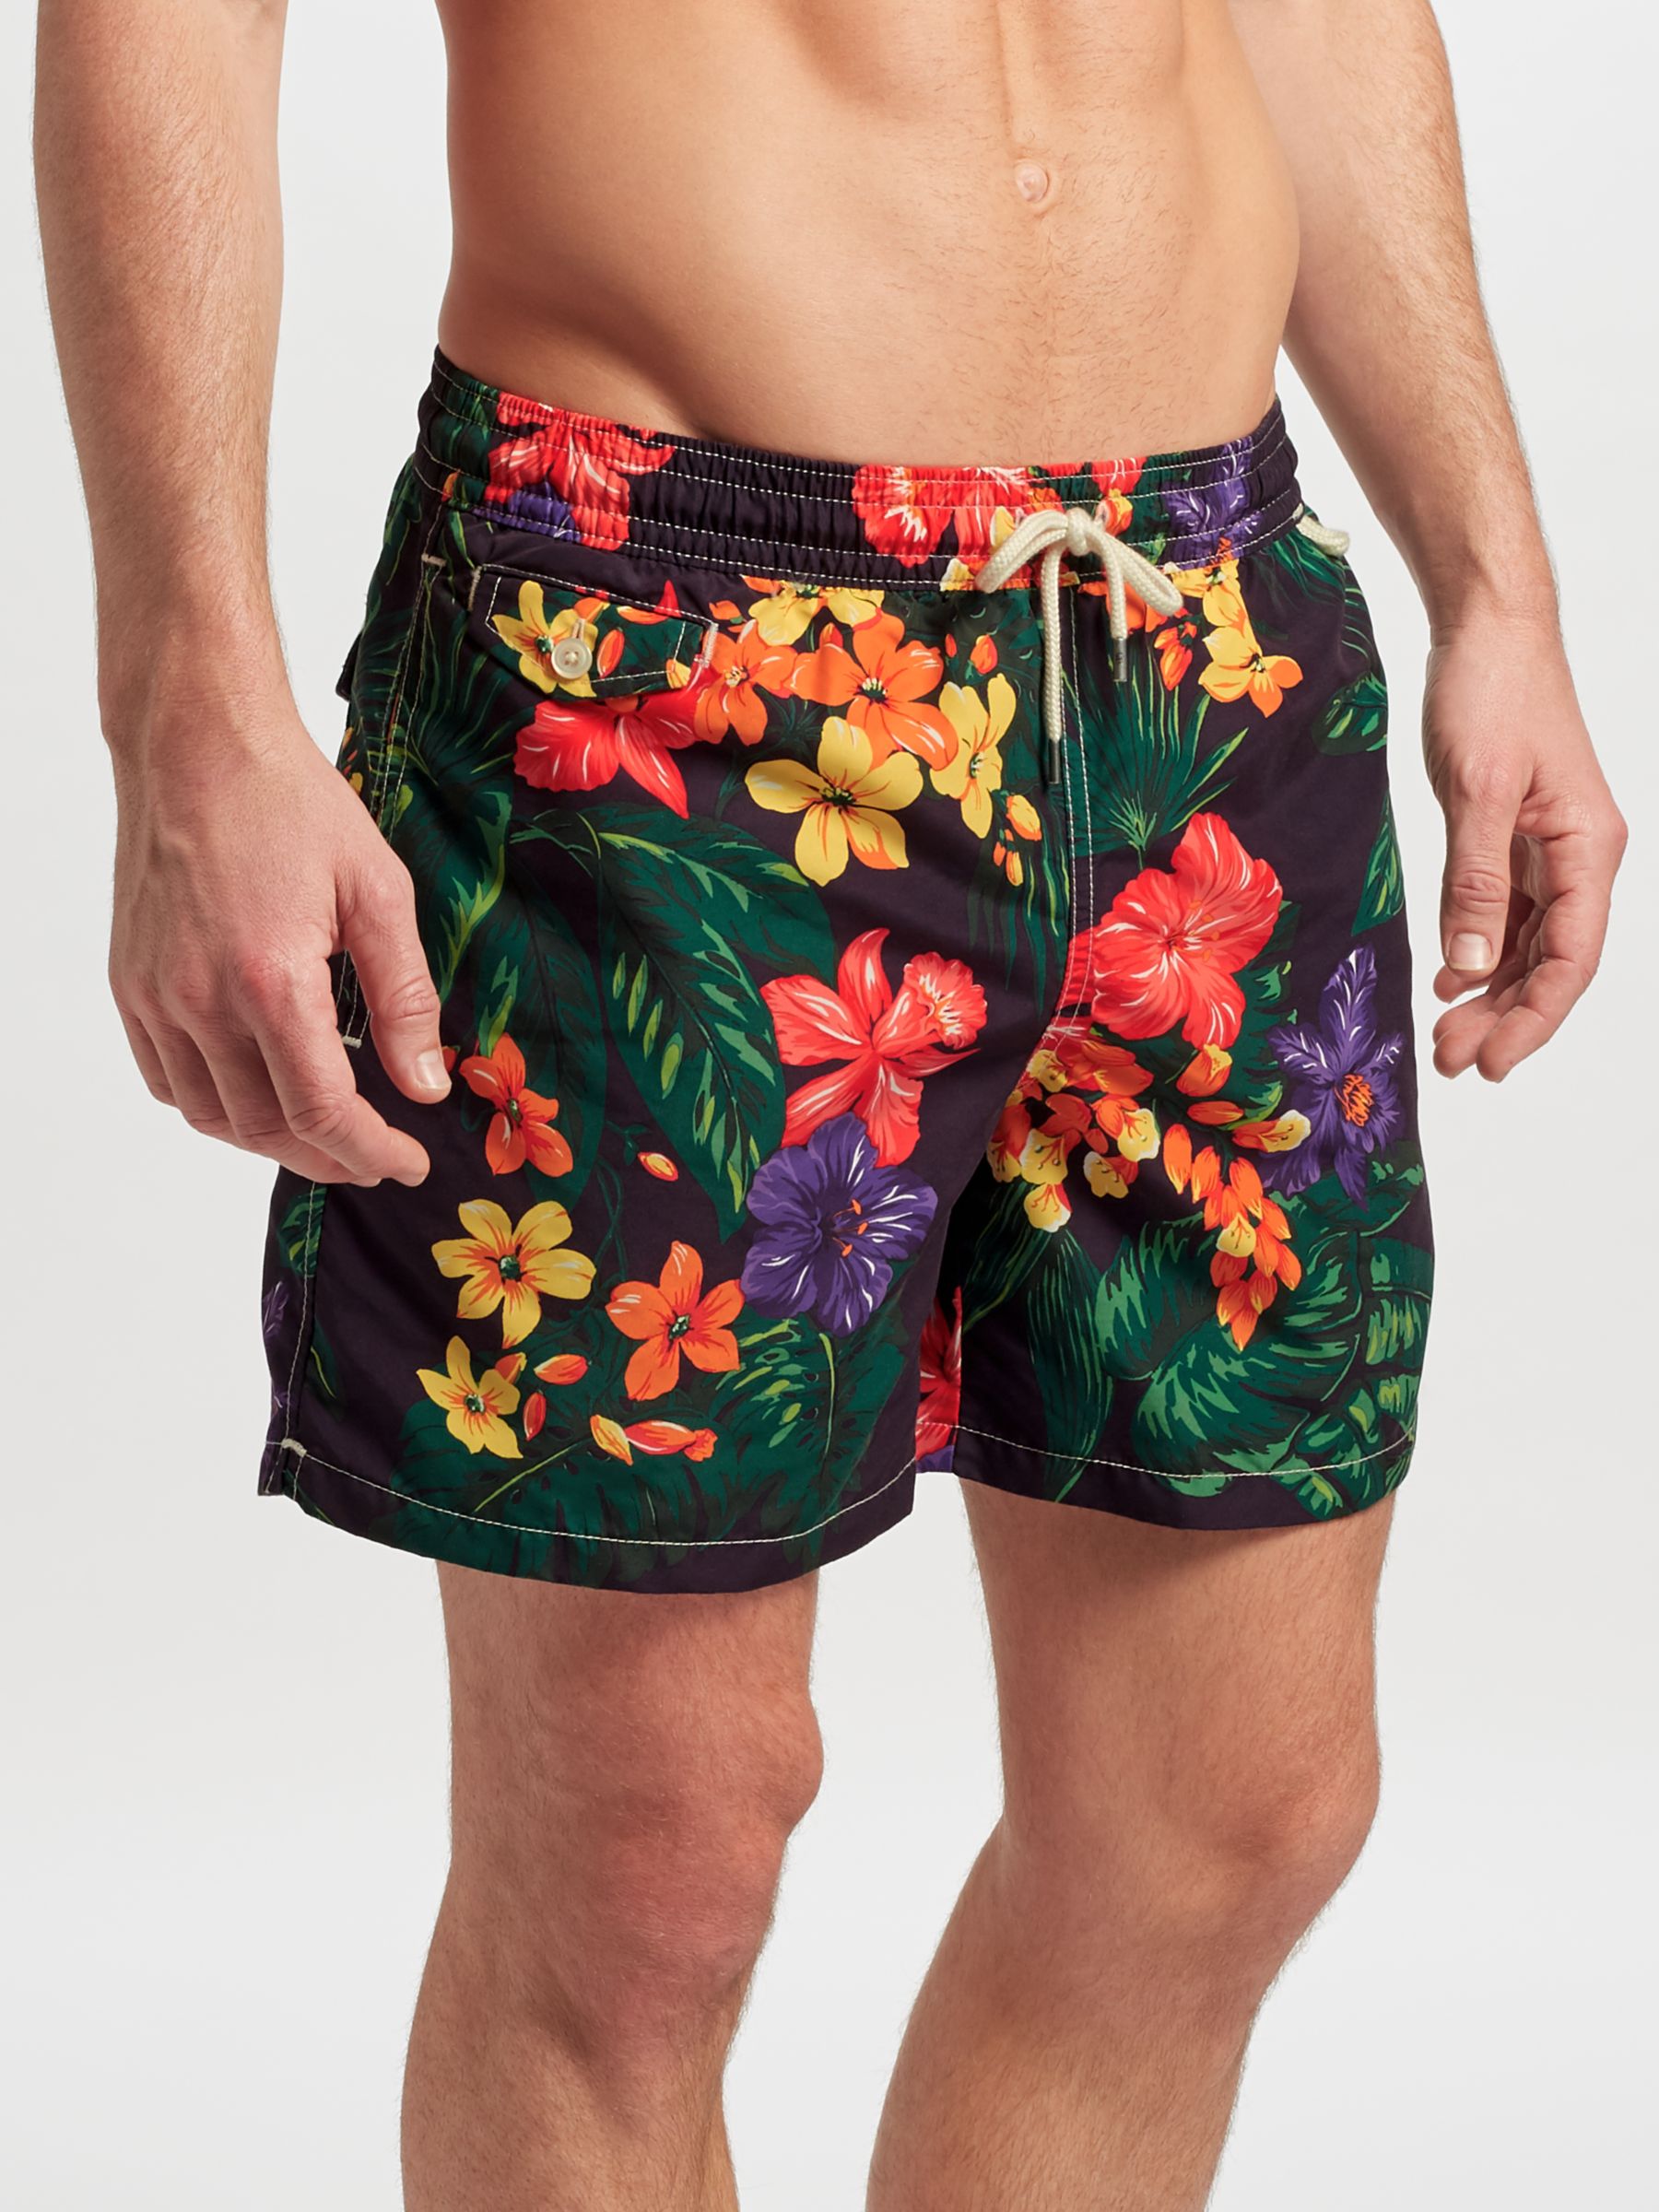 polo ralph lauren hawaiian swim shorts navy